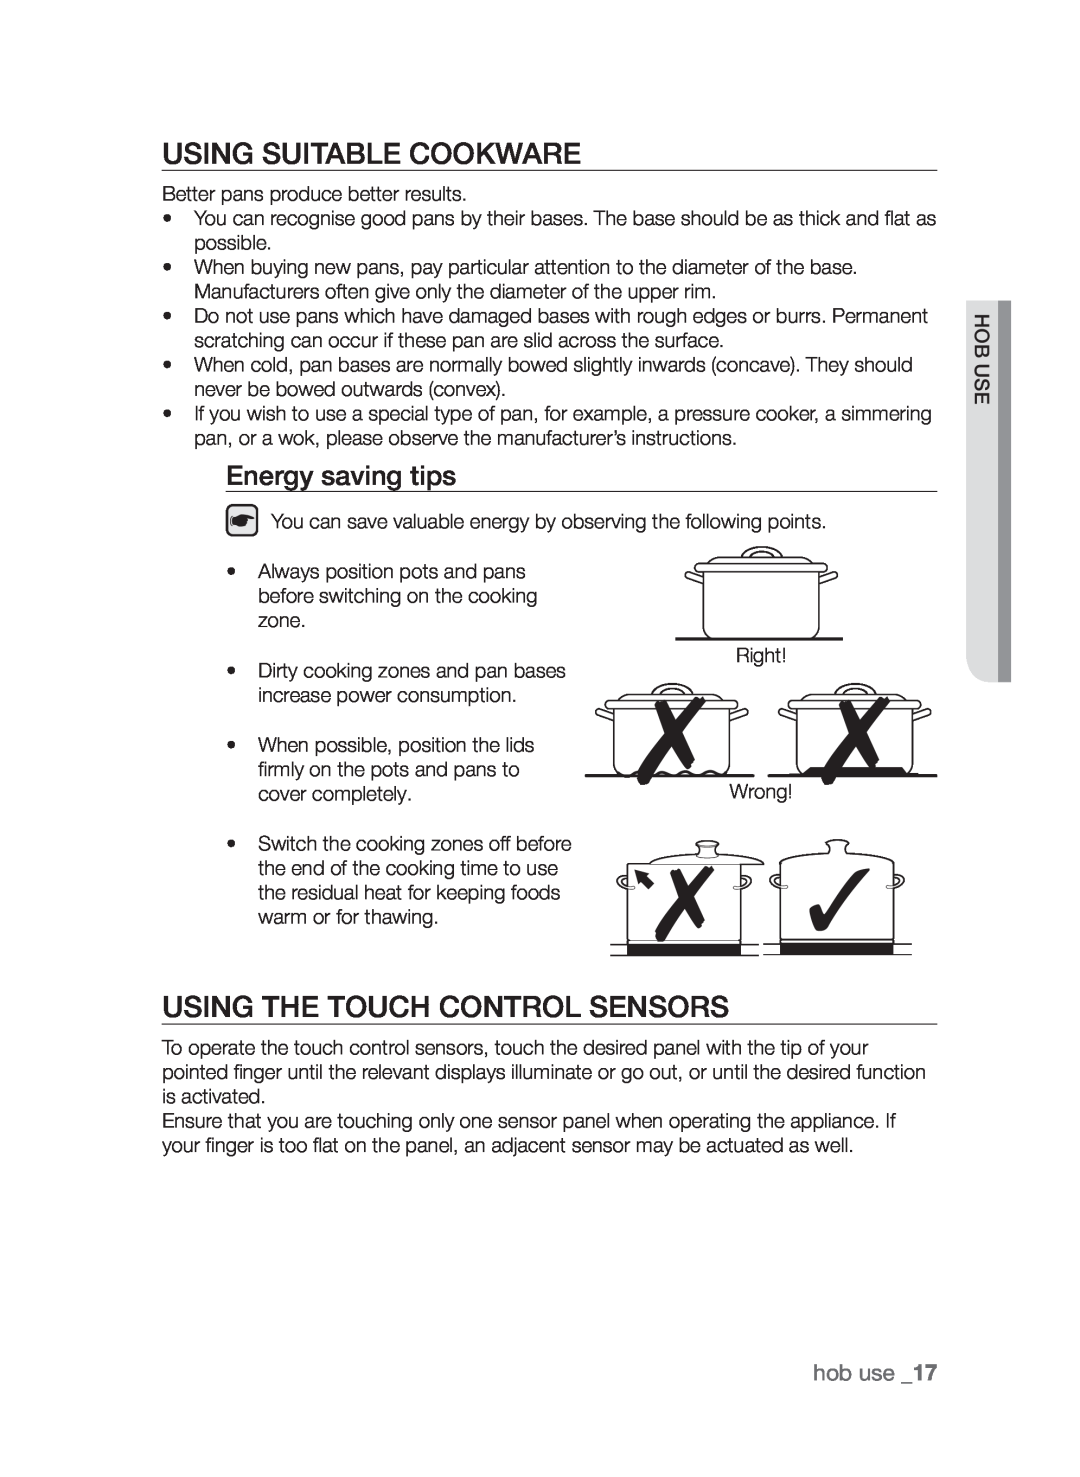 Samsung CTI613GI user manual Using suitable cookware, Using the touch control sensors, Energy saving tips, hob use 